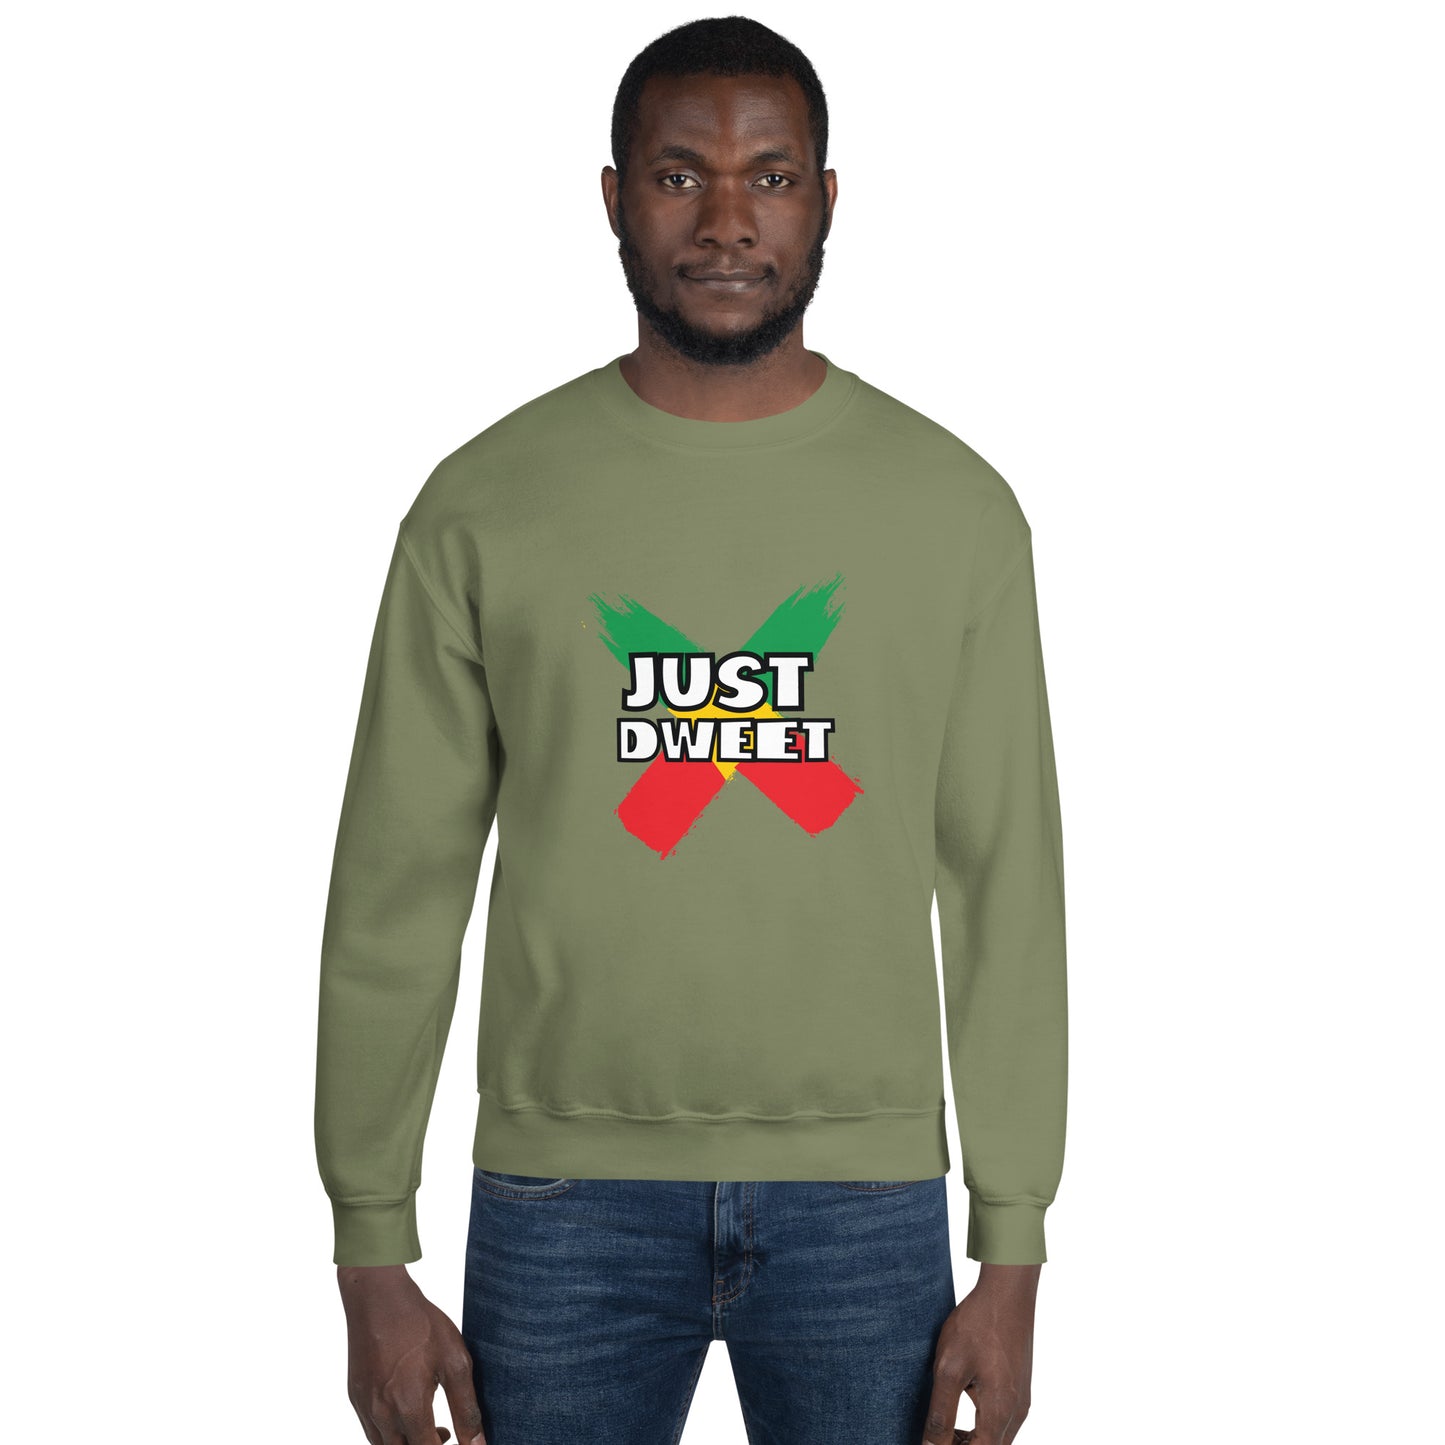 Unisex "Just Dweet" Sweatshirt